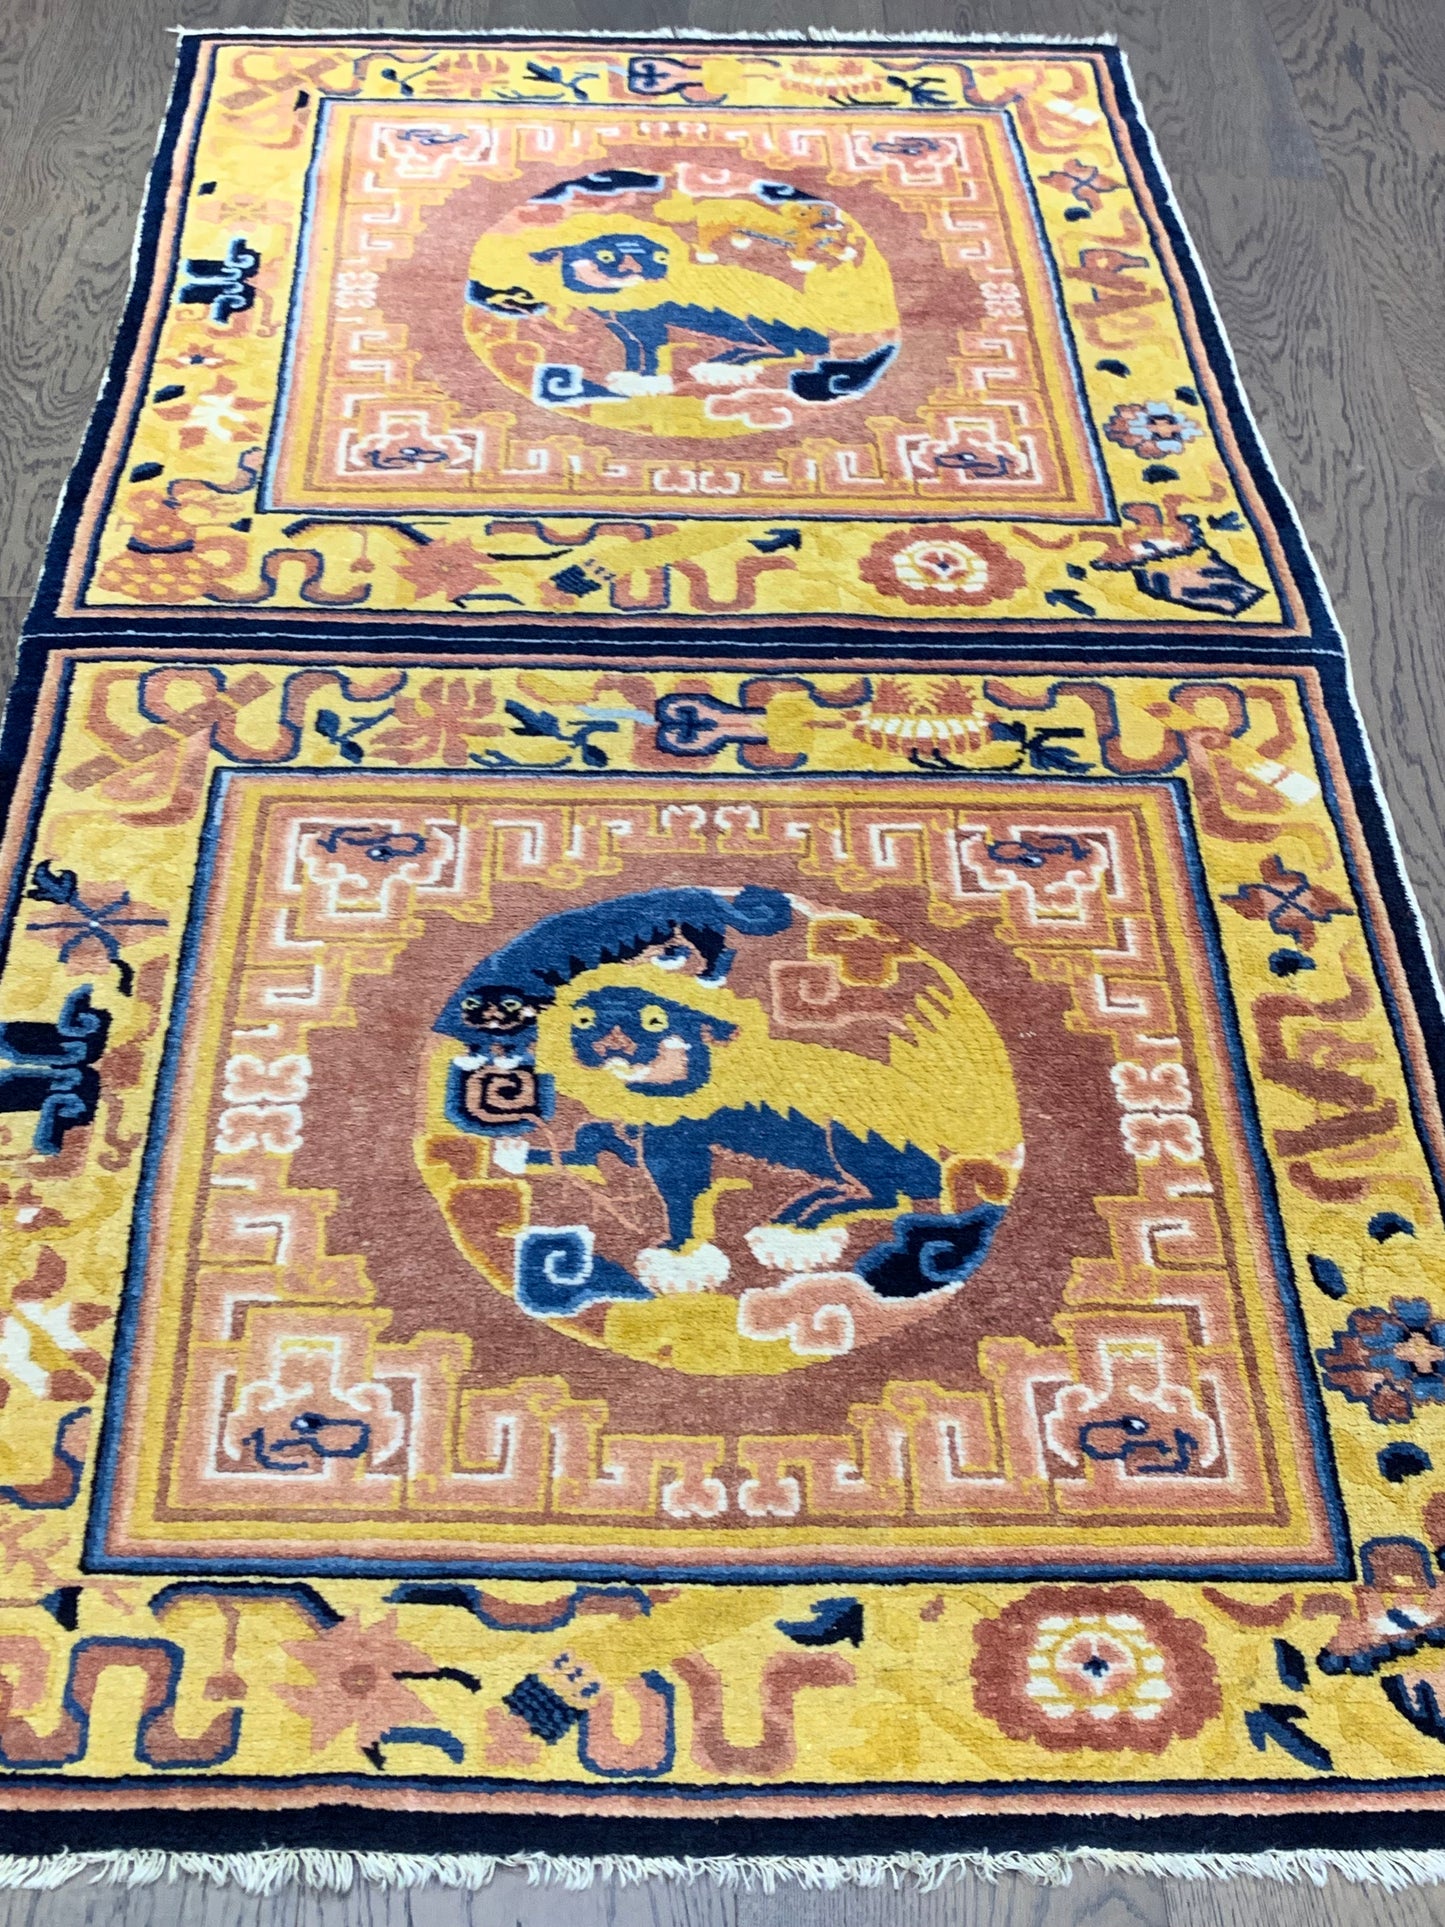 Antique Chinese FU dog design rug